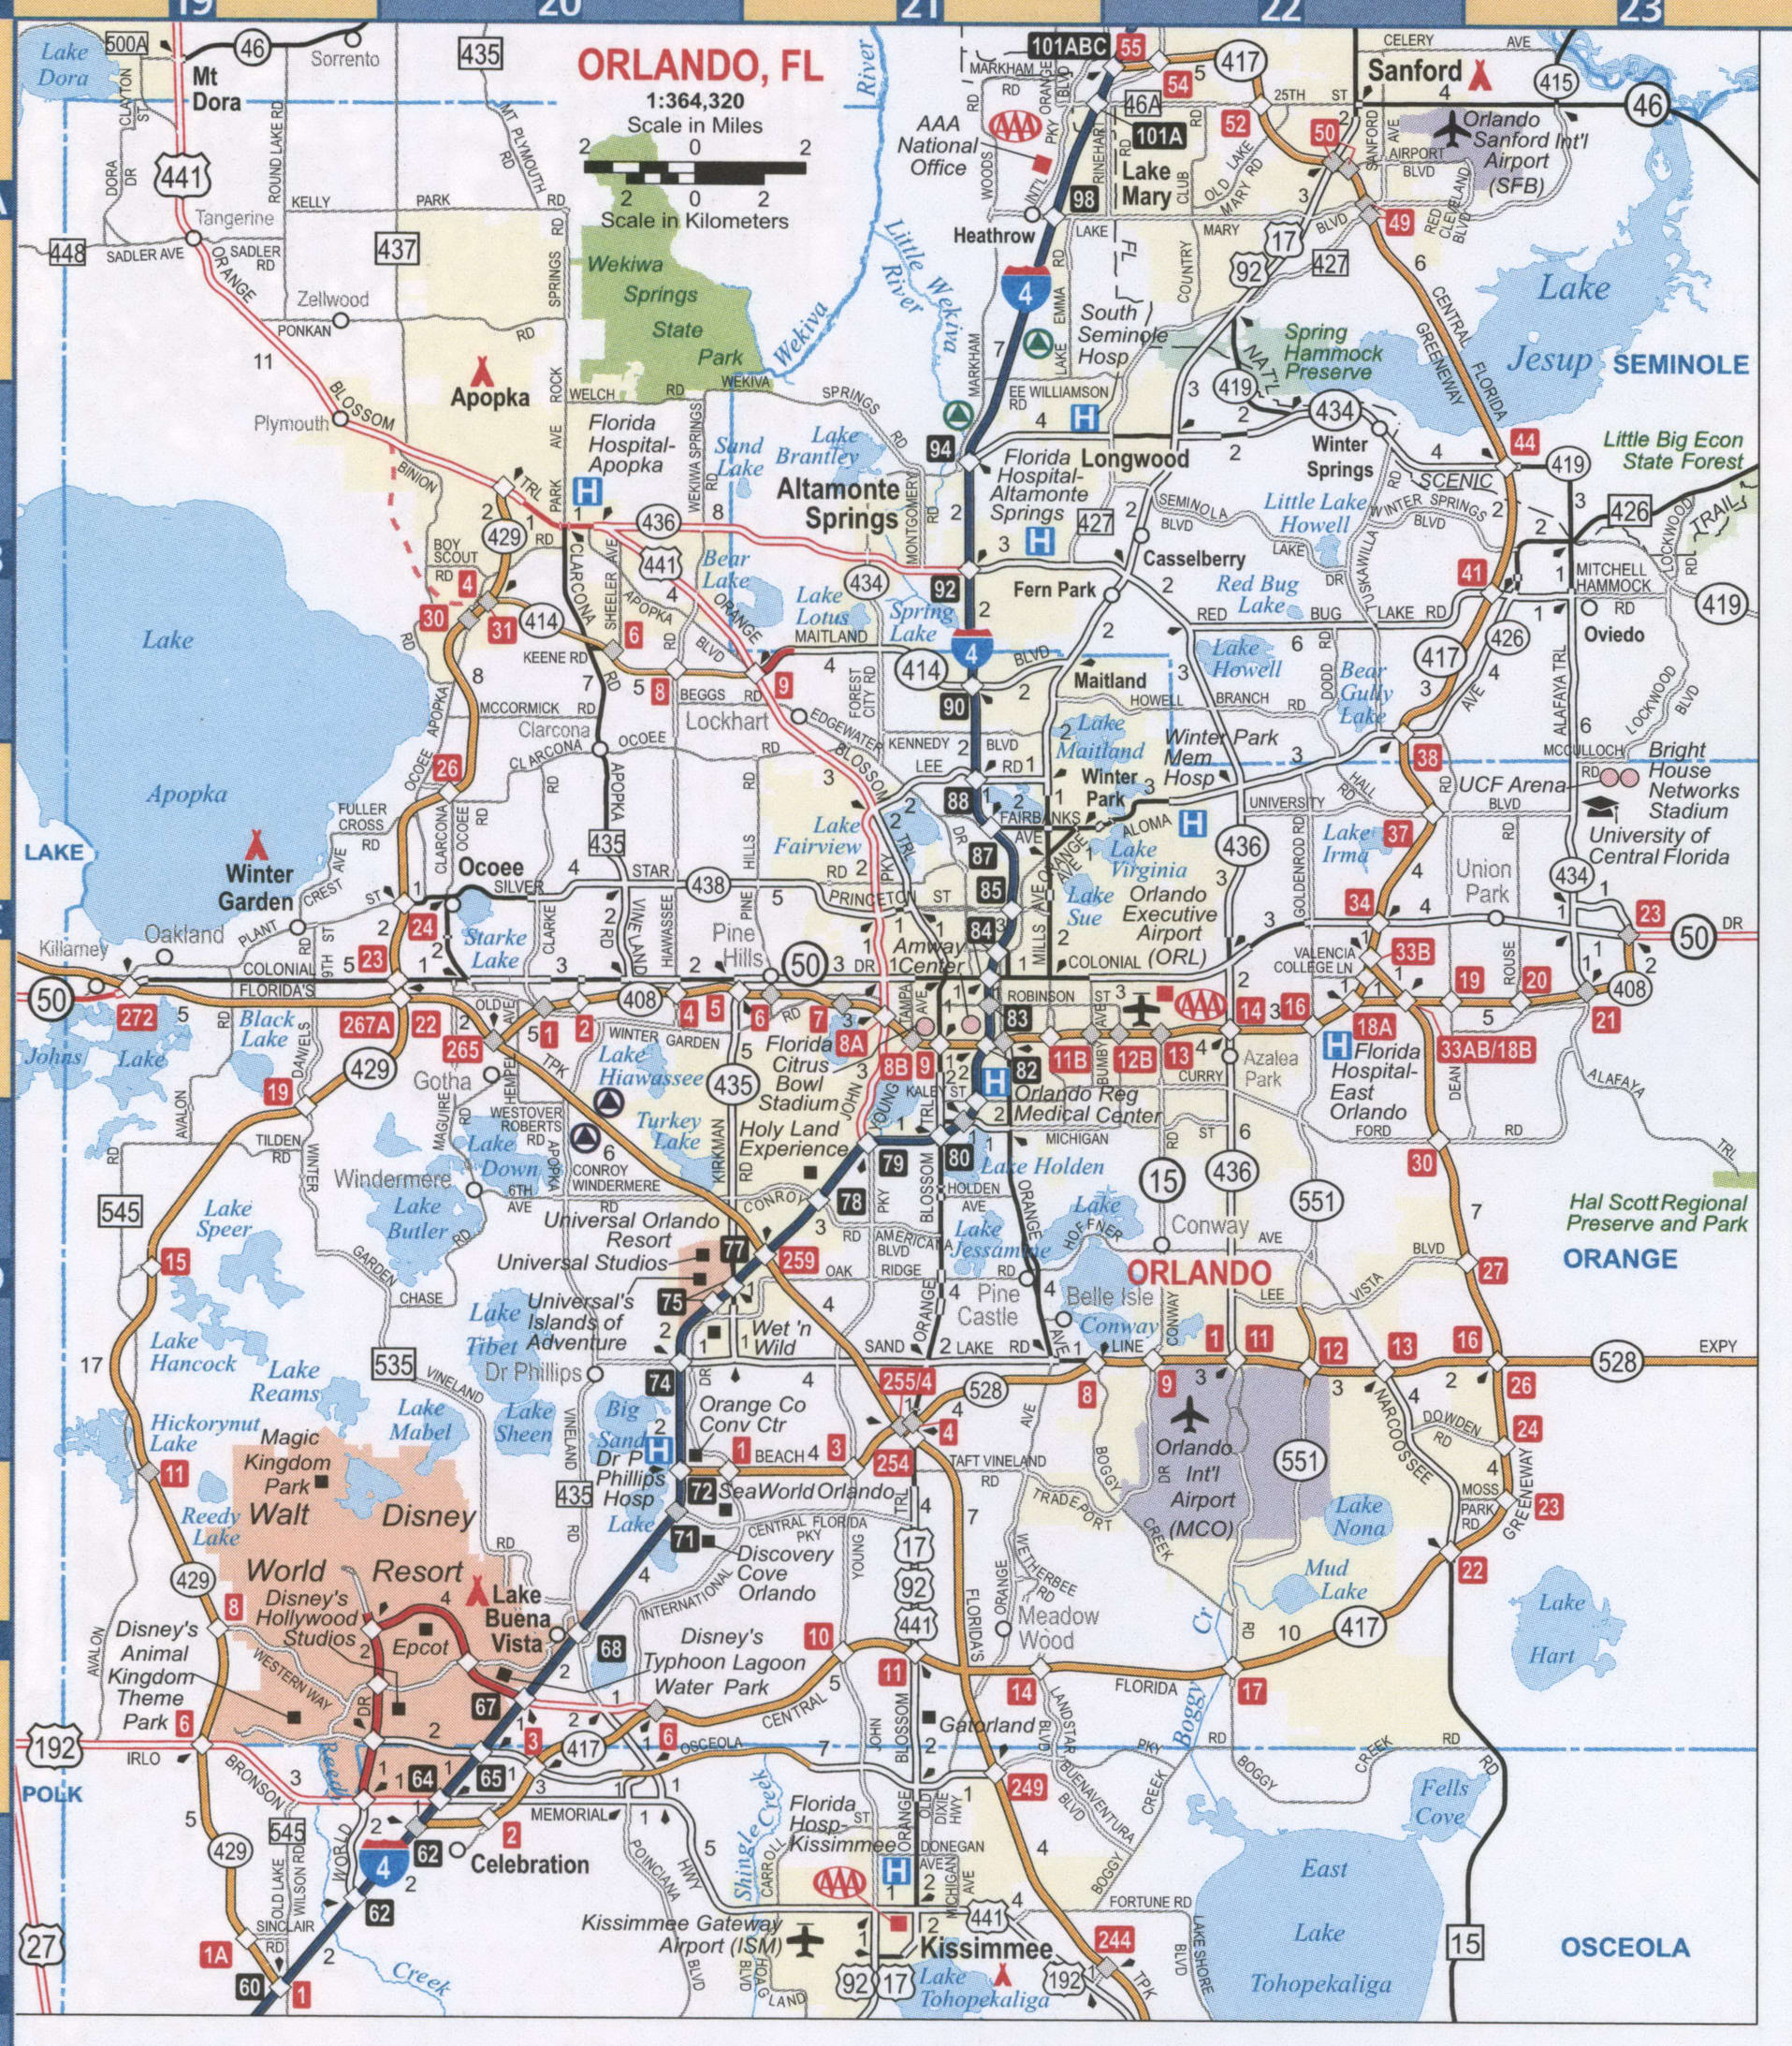 Orlando FL road map